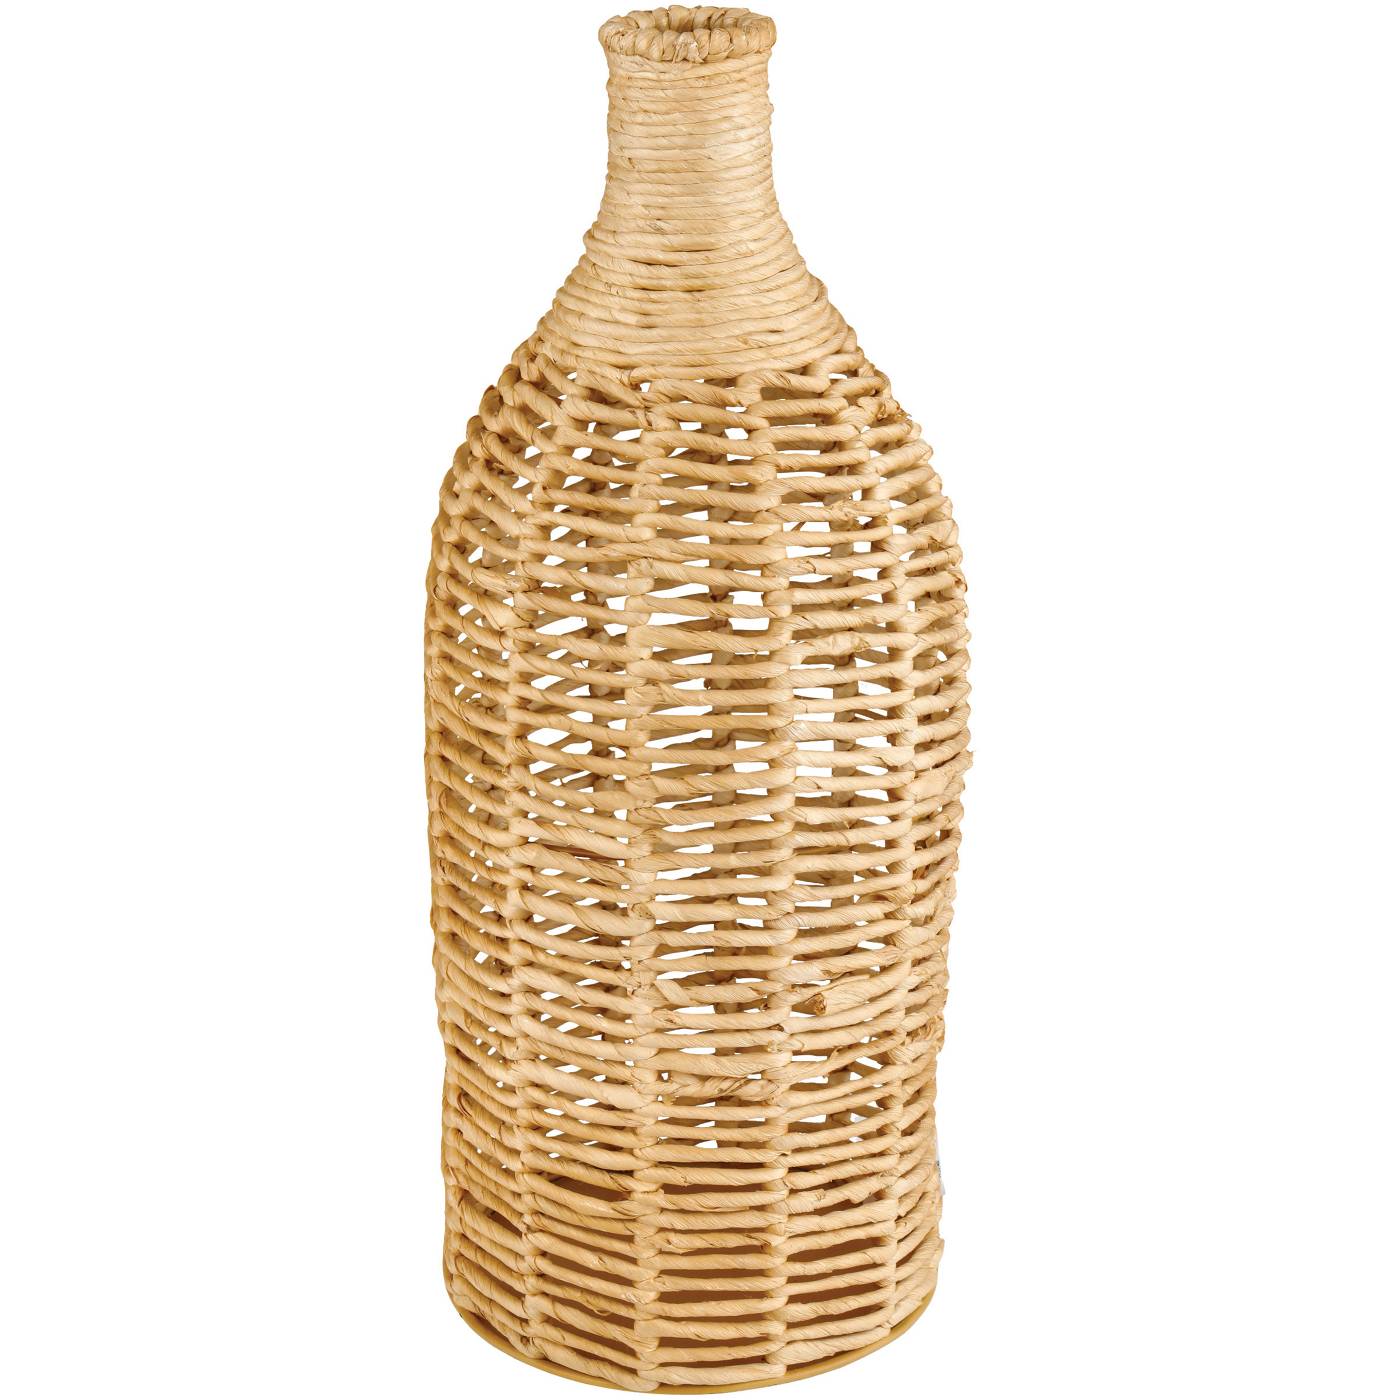 Haven + Key Decorative Rattan Vase – Tan; image 1 of 2